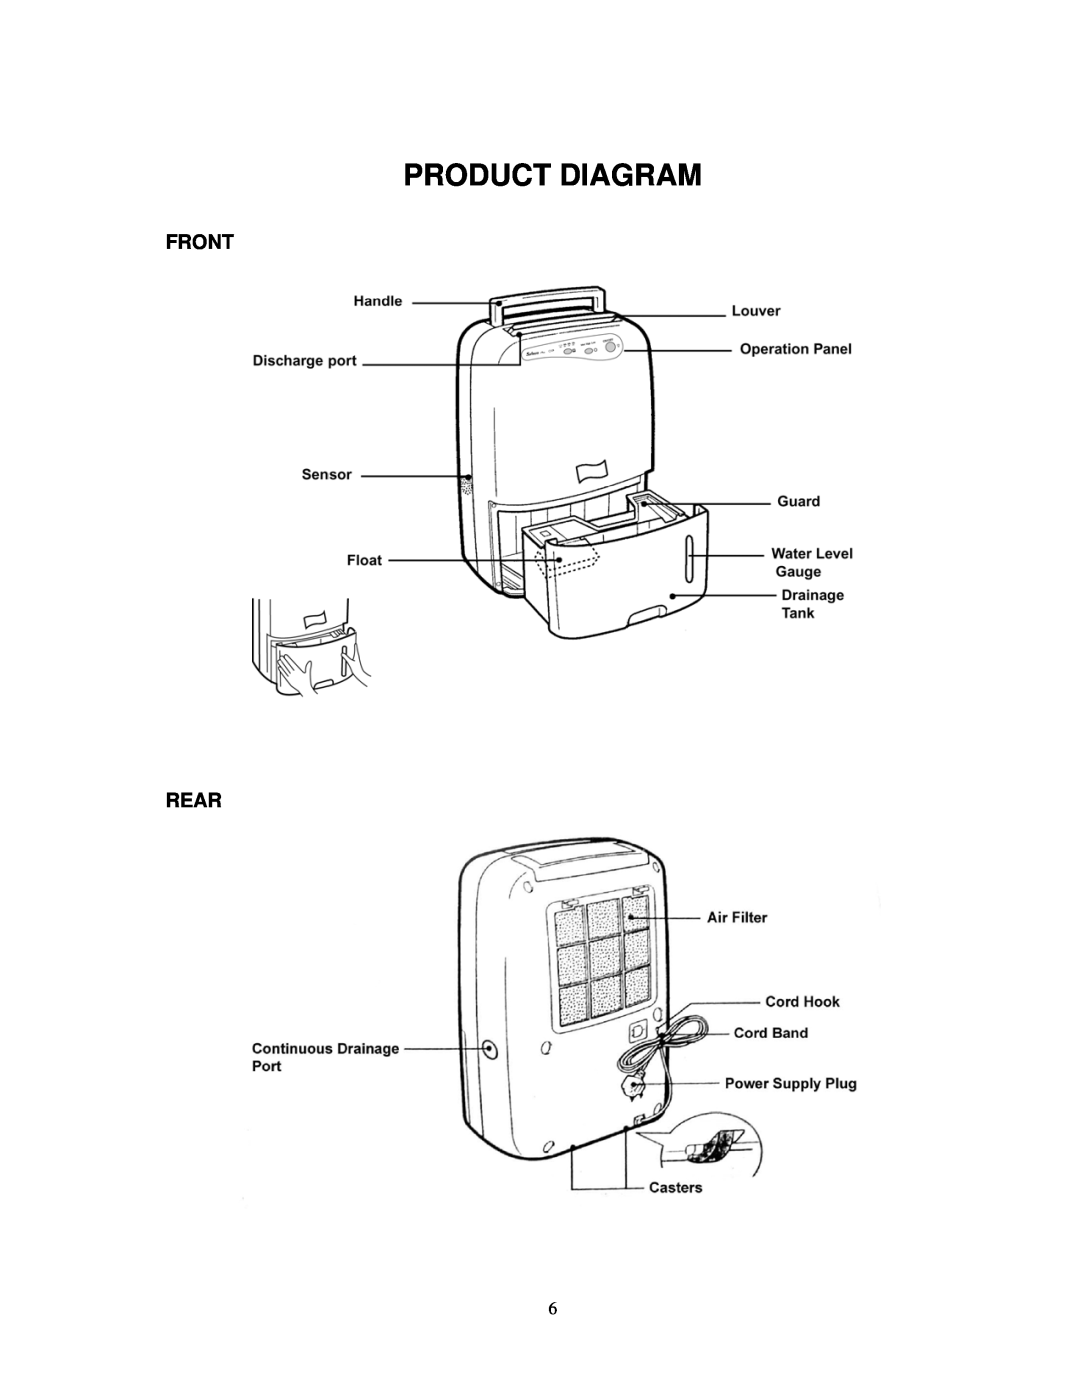 Soleus Air PORTABLE DEHUMIDIFIER user manual Product Diagram, Front Rear 